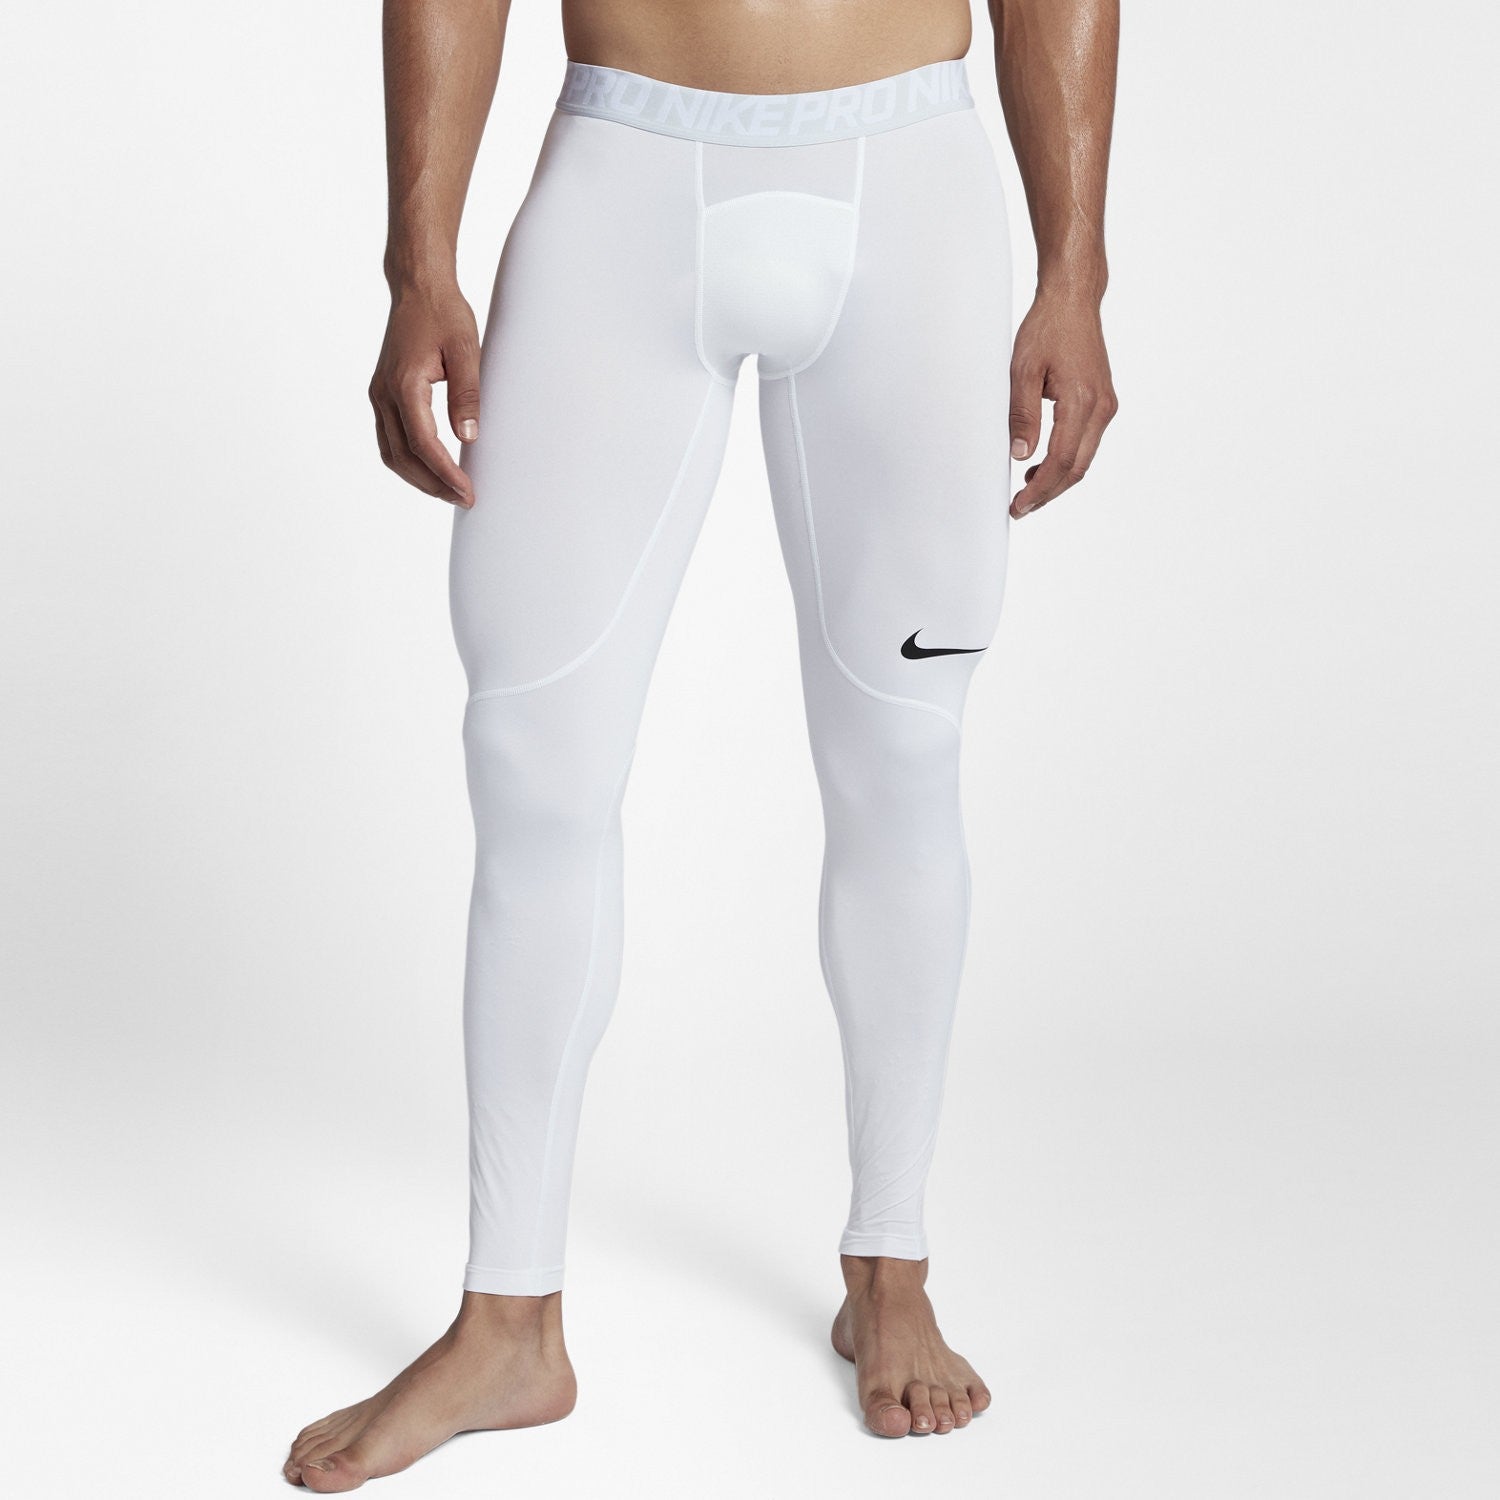 NEW Men's Nike Pro 3/4 Dri-Fit Compression Tights Pants White